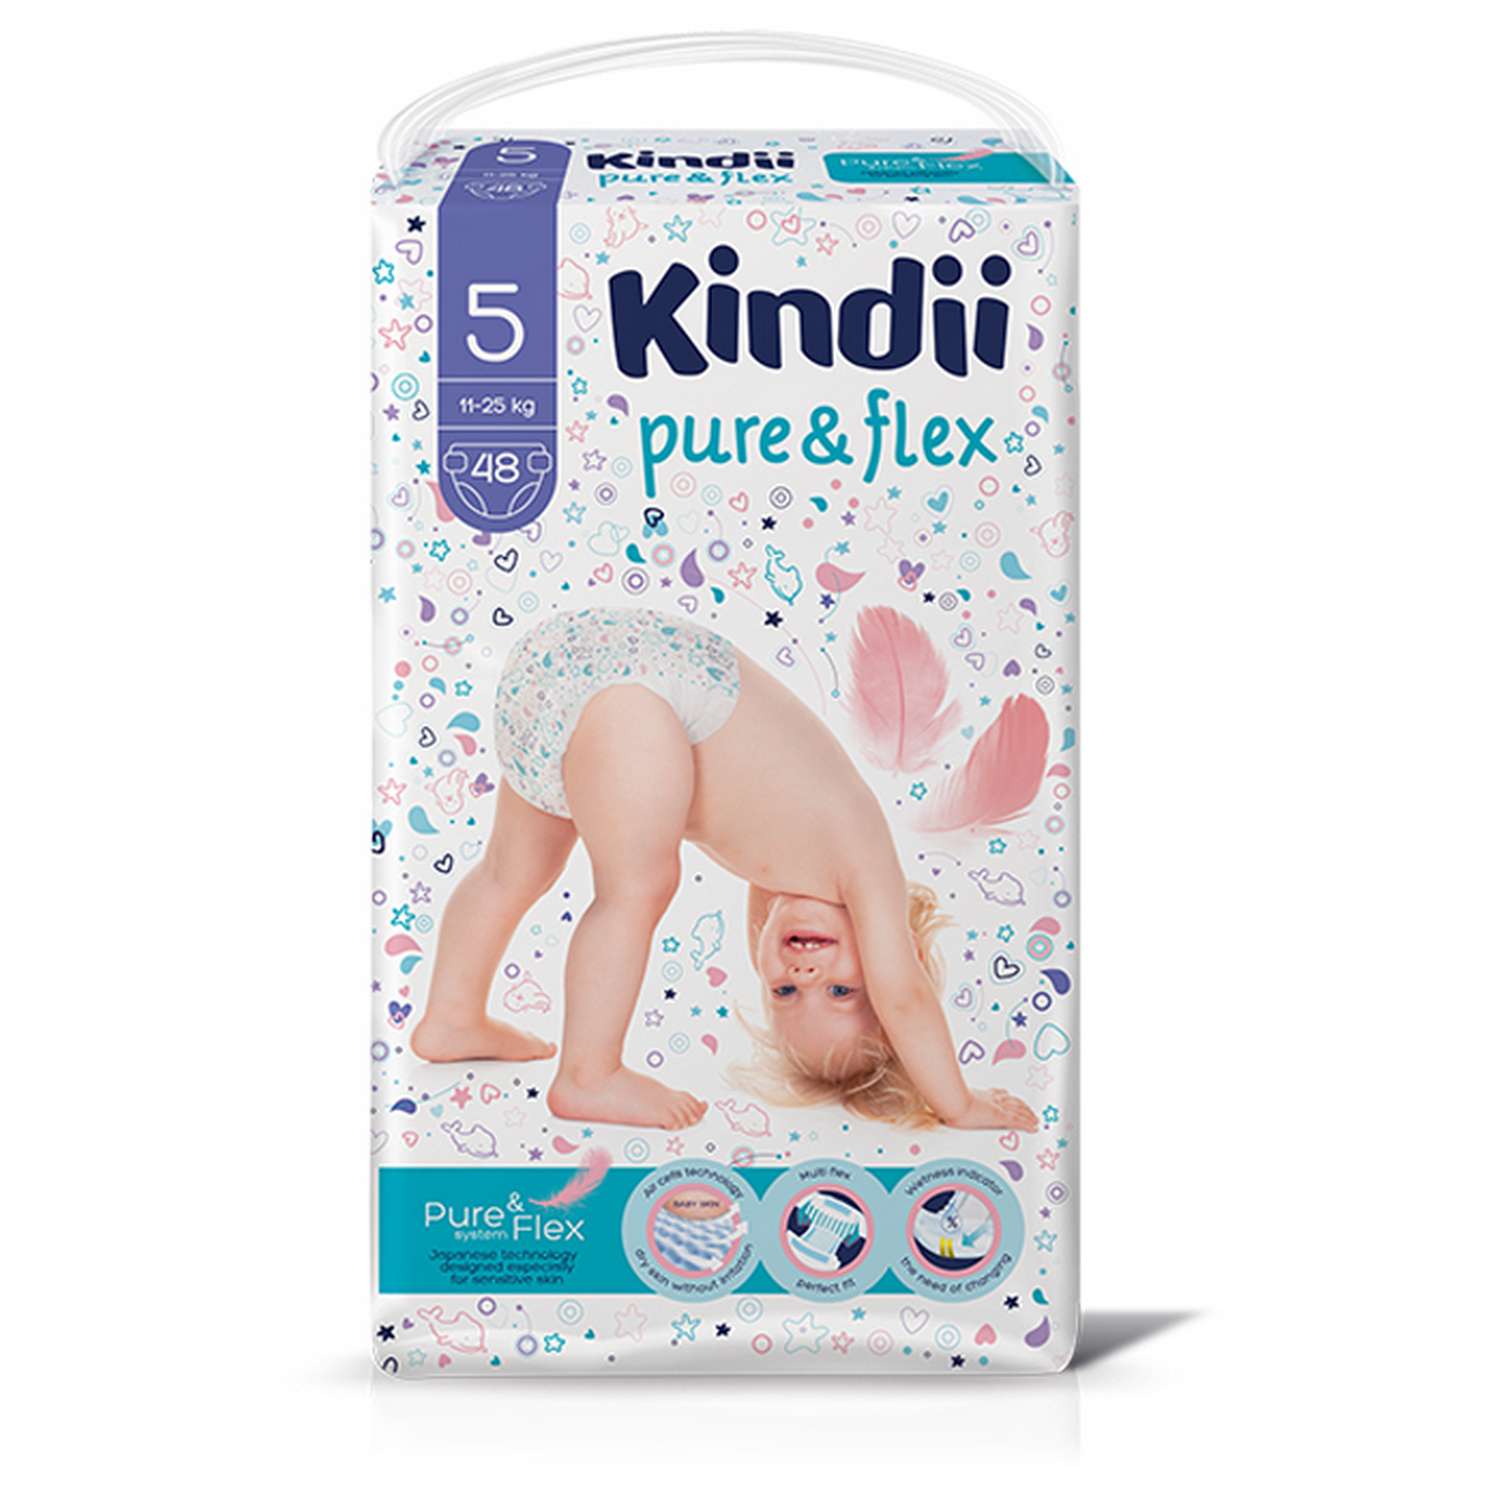 Подгузники Kindii одноразовые для детей 5 XL jambo-pack 48шт - фото 2